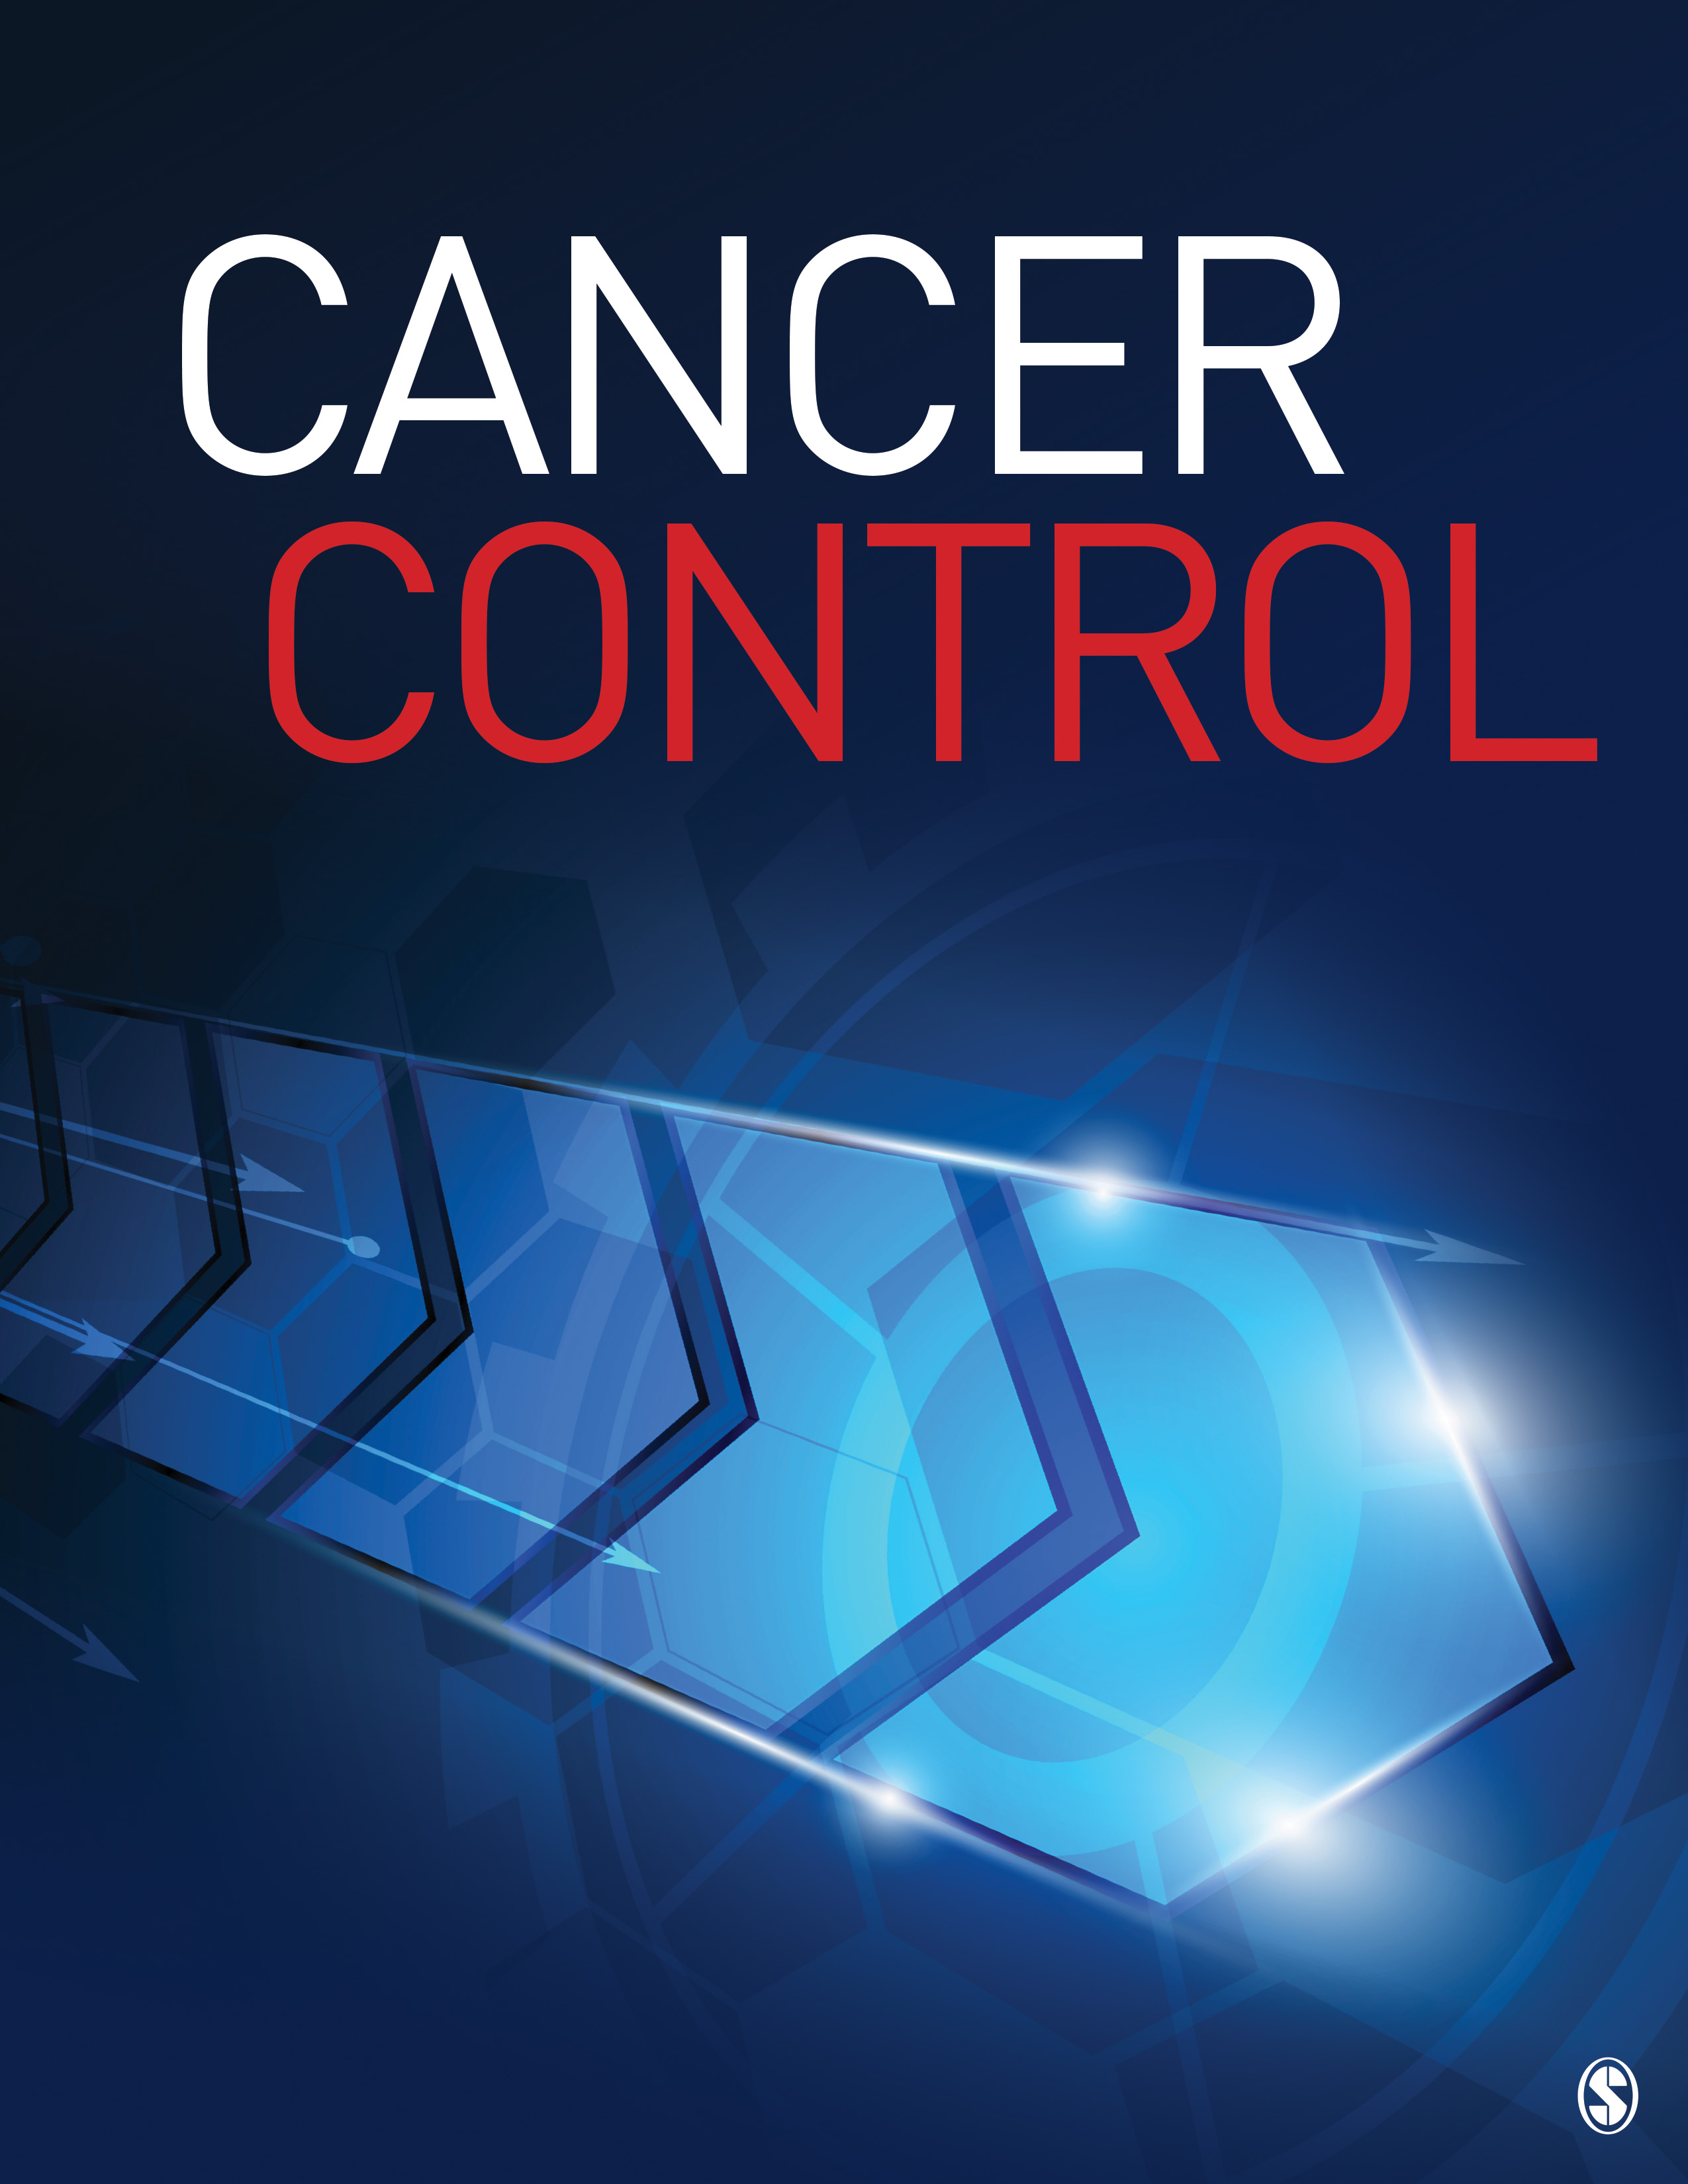 CANCER CONTROL